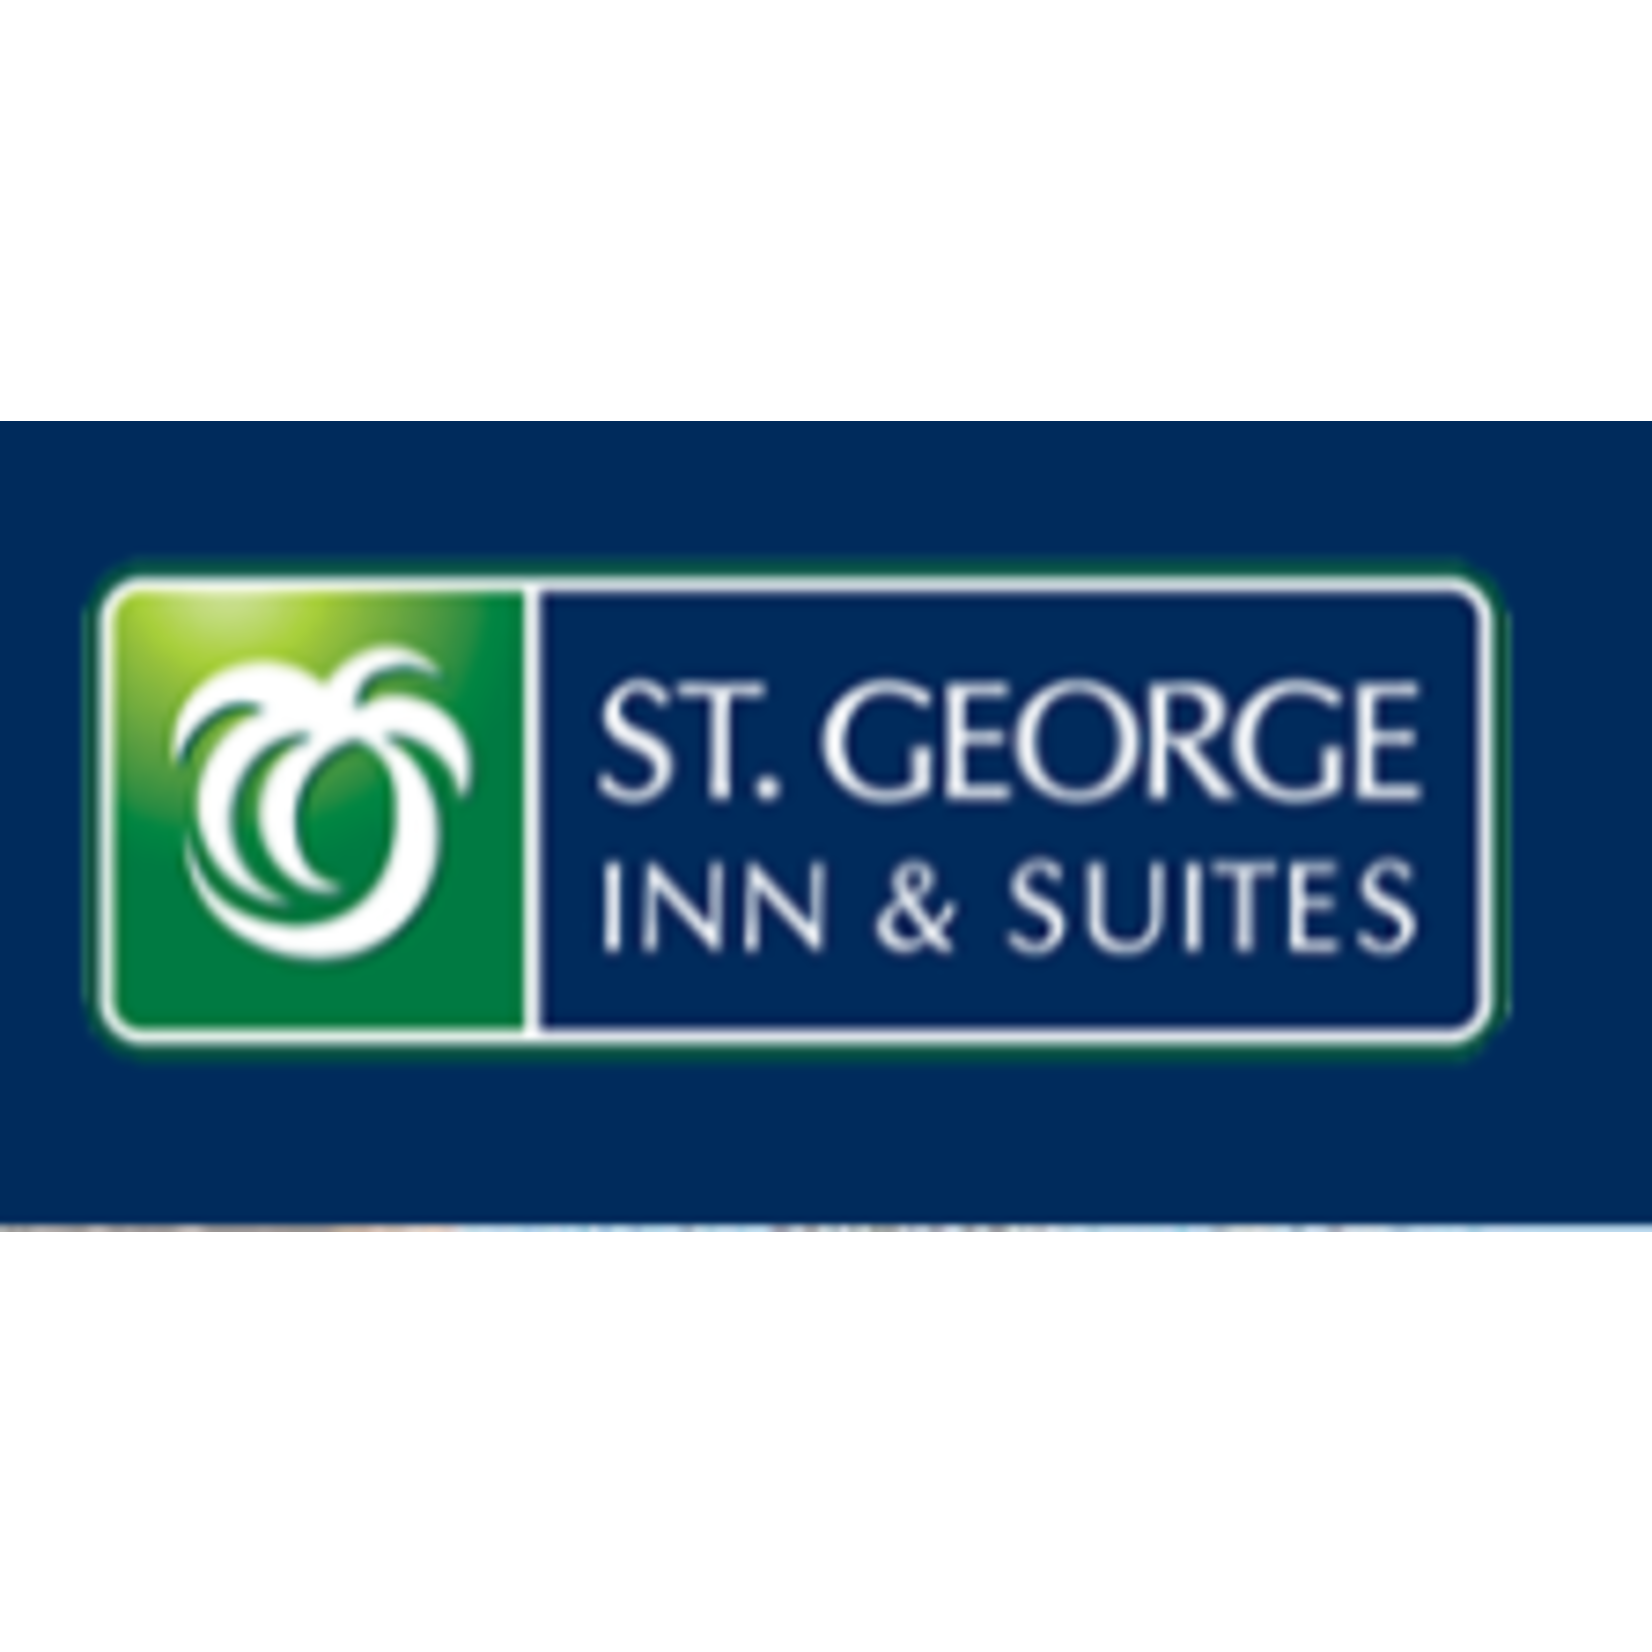 UT - St George Inn & Suites UT - St George Inn & Suites $90 - (1) Night Stay (Sun-Thurs)